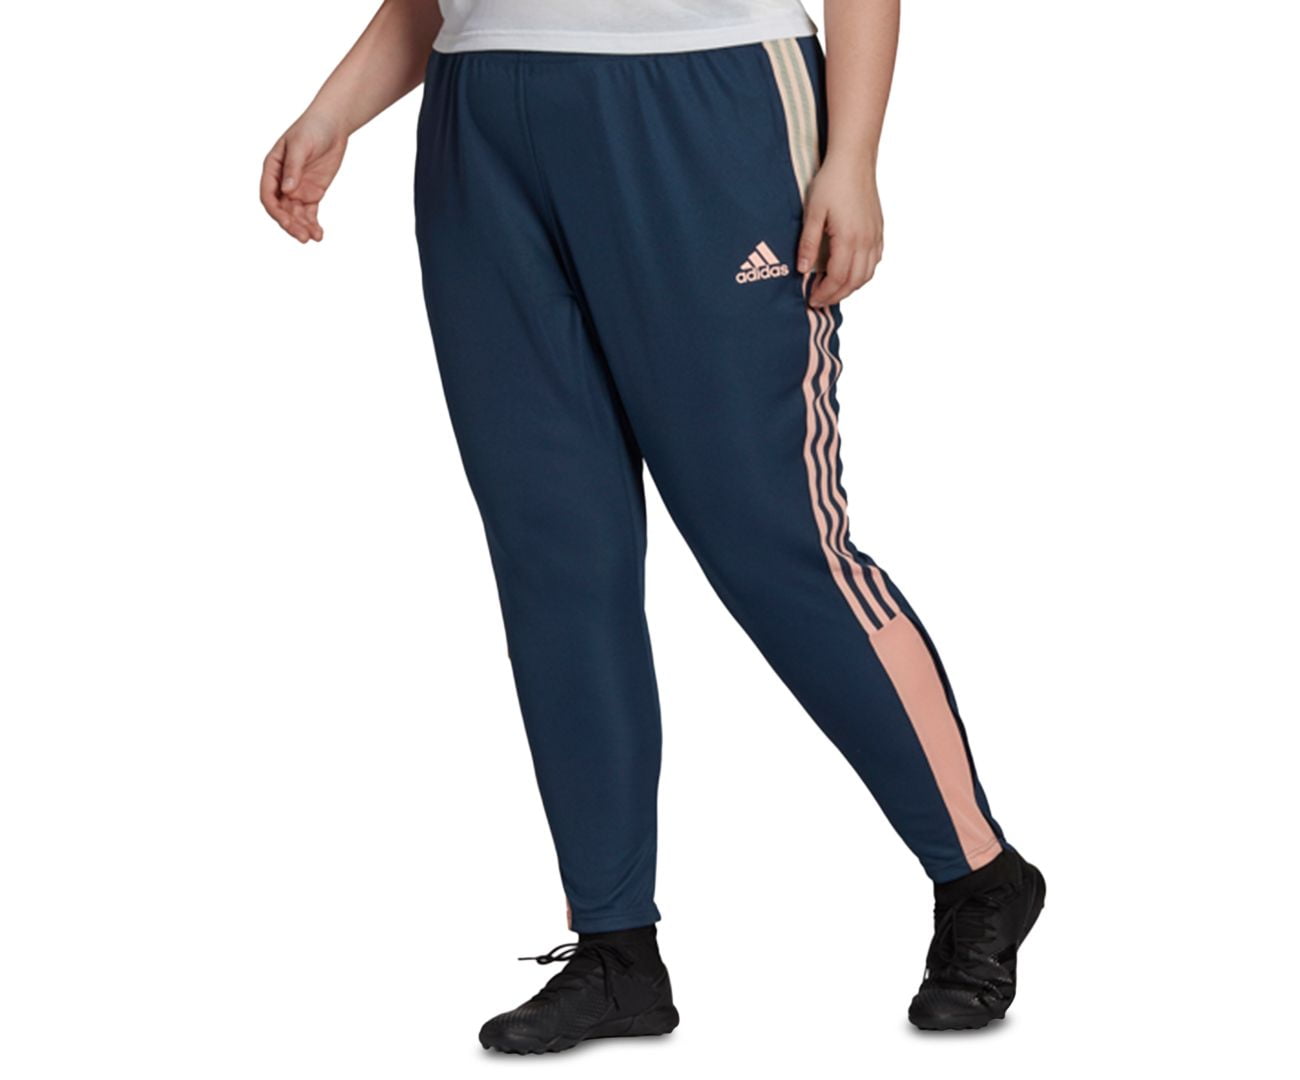 Adidas Women's 3 Stripe Pants, Black/Shock Pink - Walmart.com